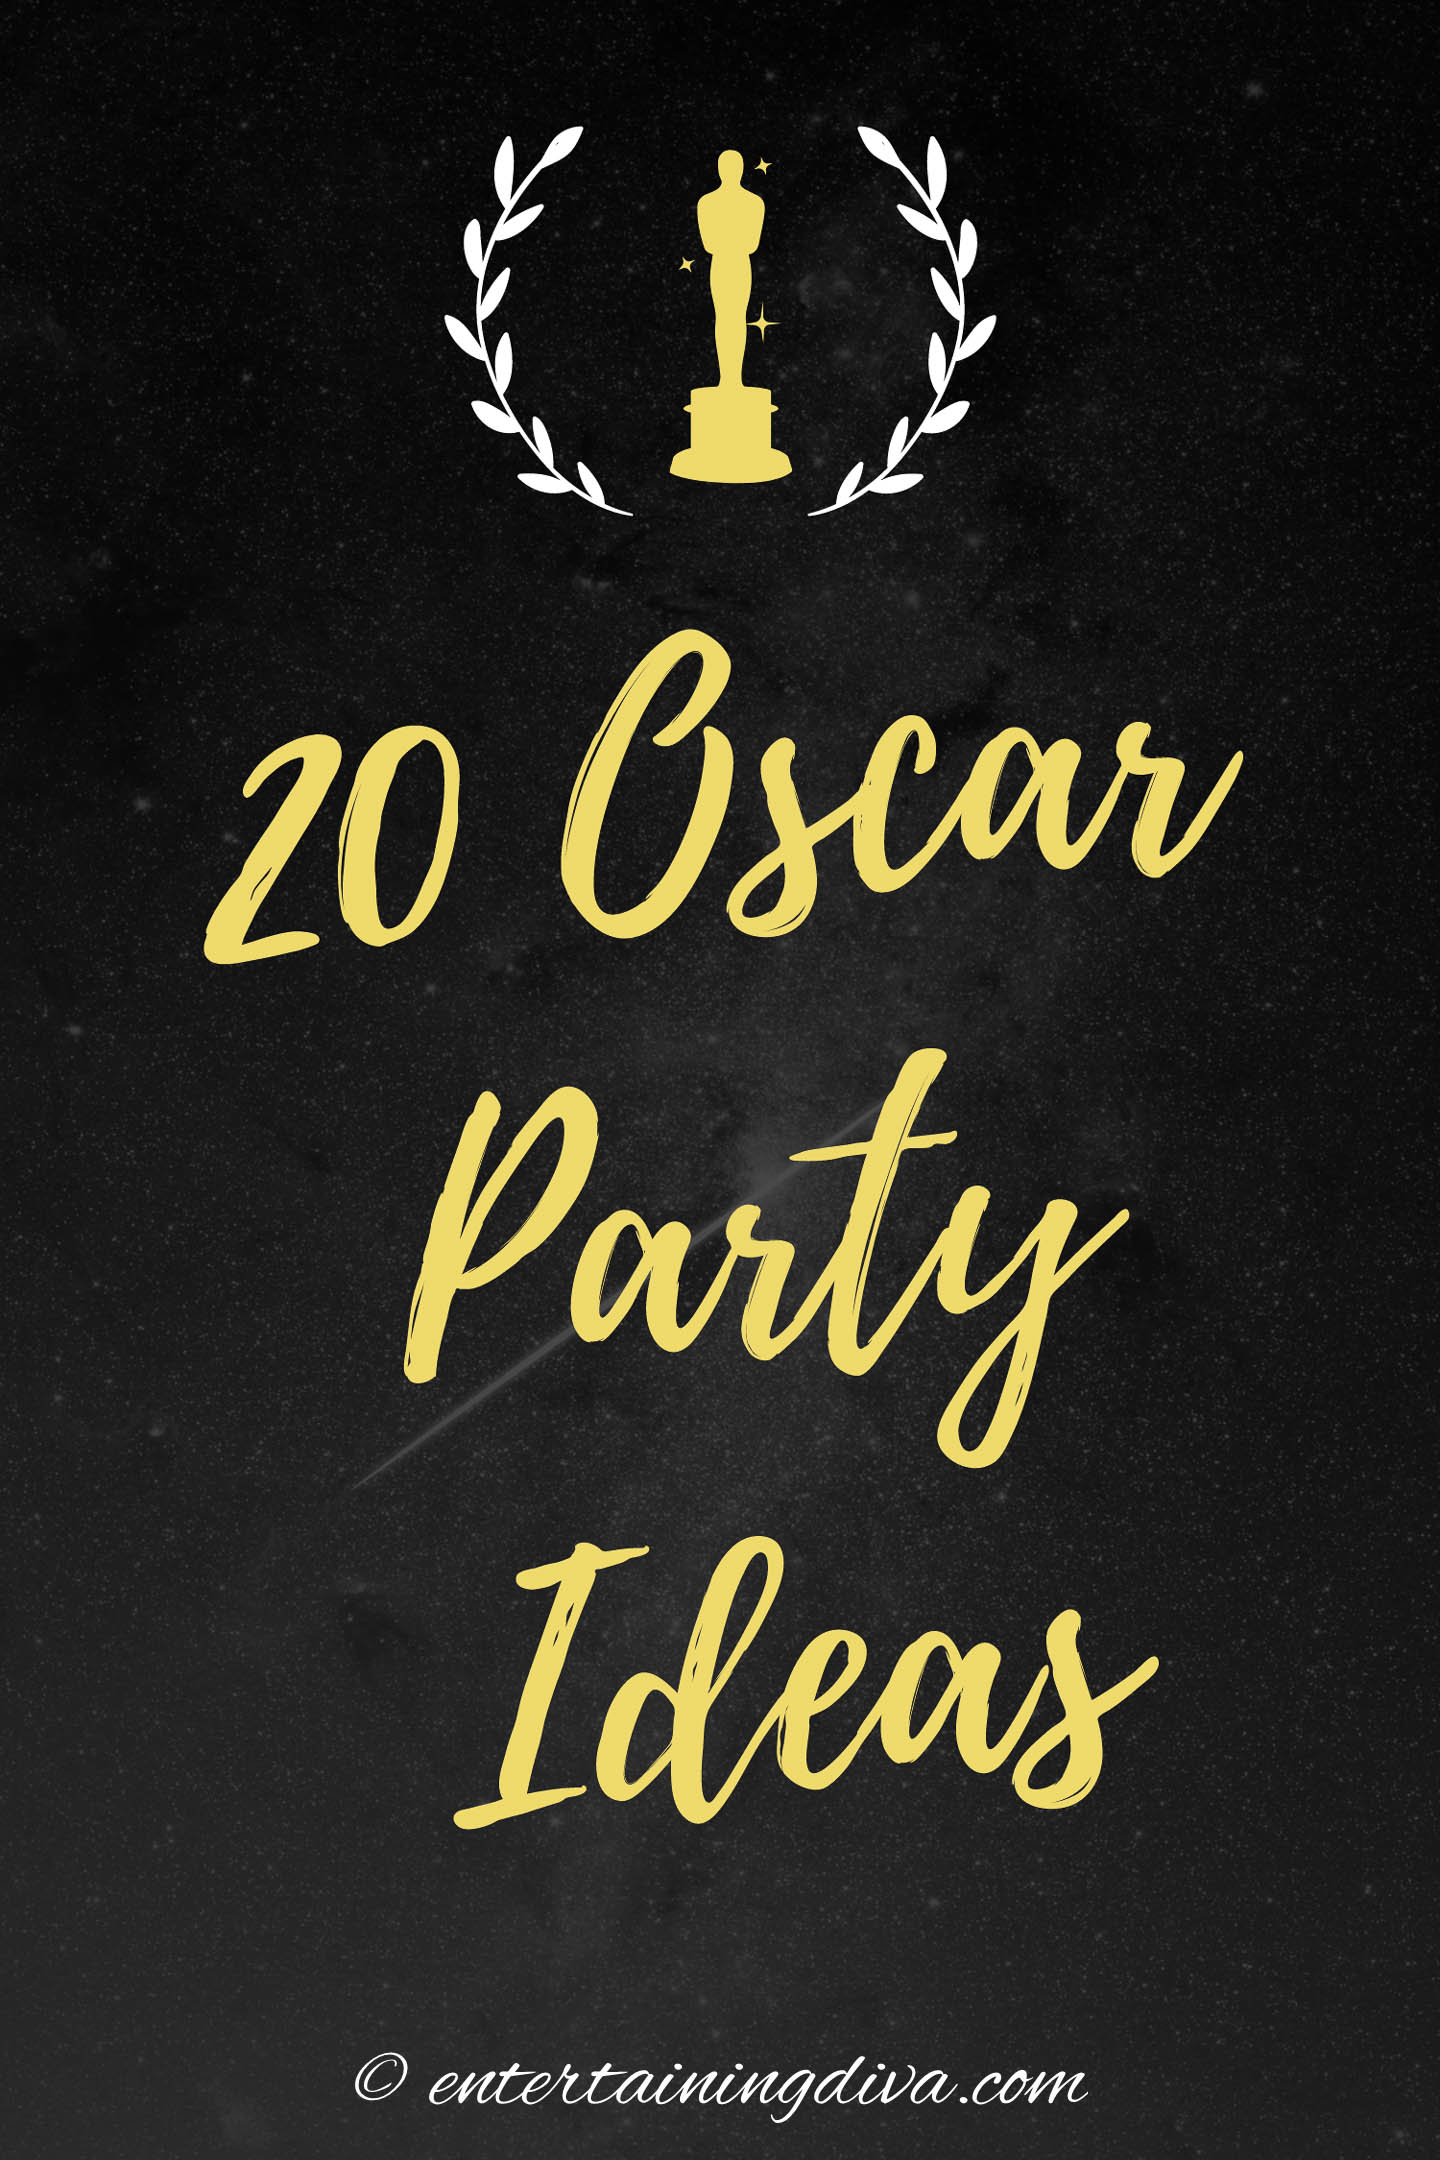 20 Oscar Party Ideas